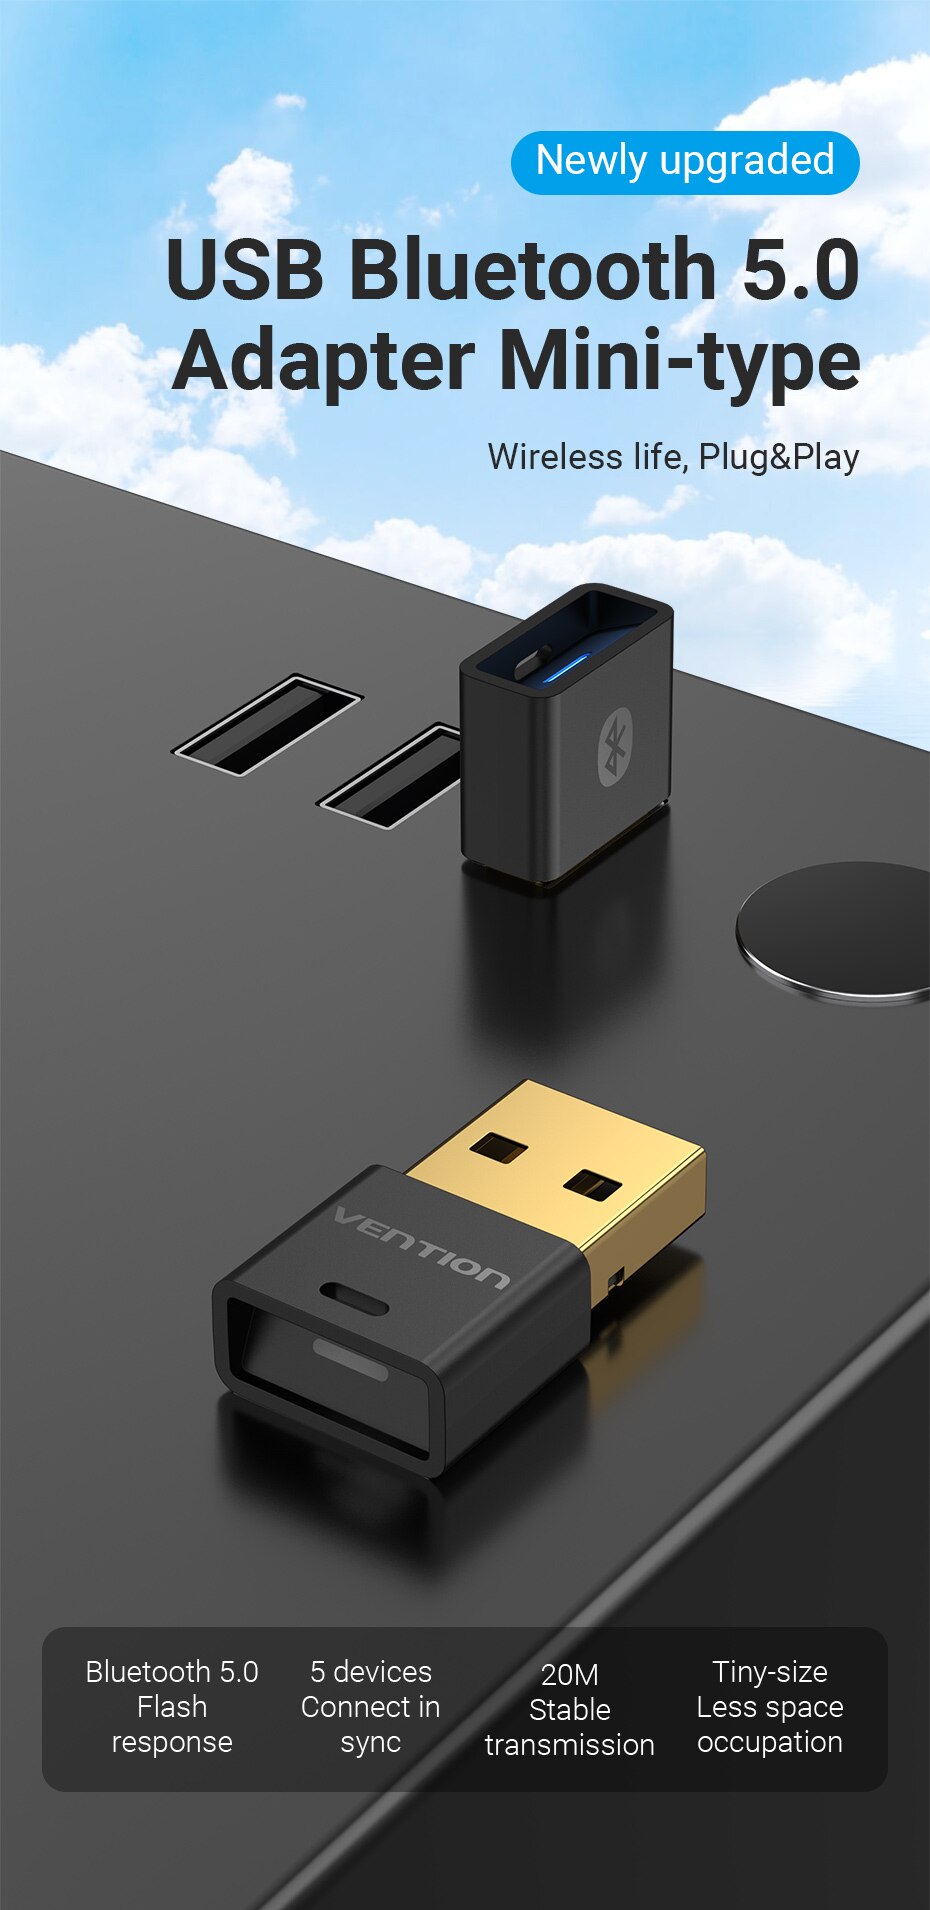 Bluetooth 5.0 USB Dongle, Black, AYOUB COMPUTERS